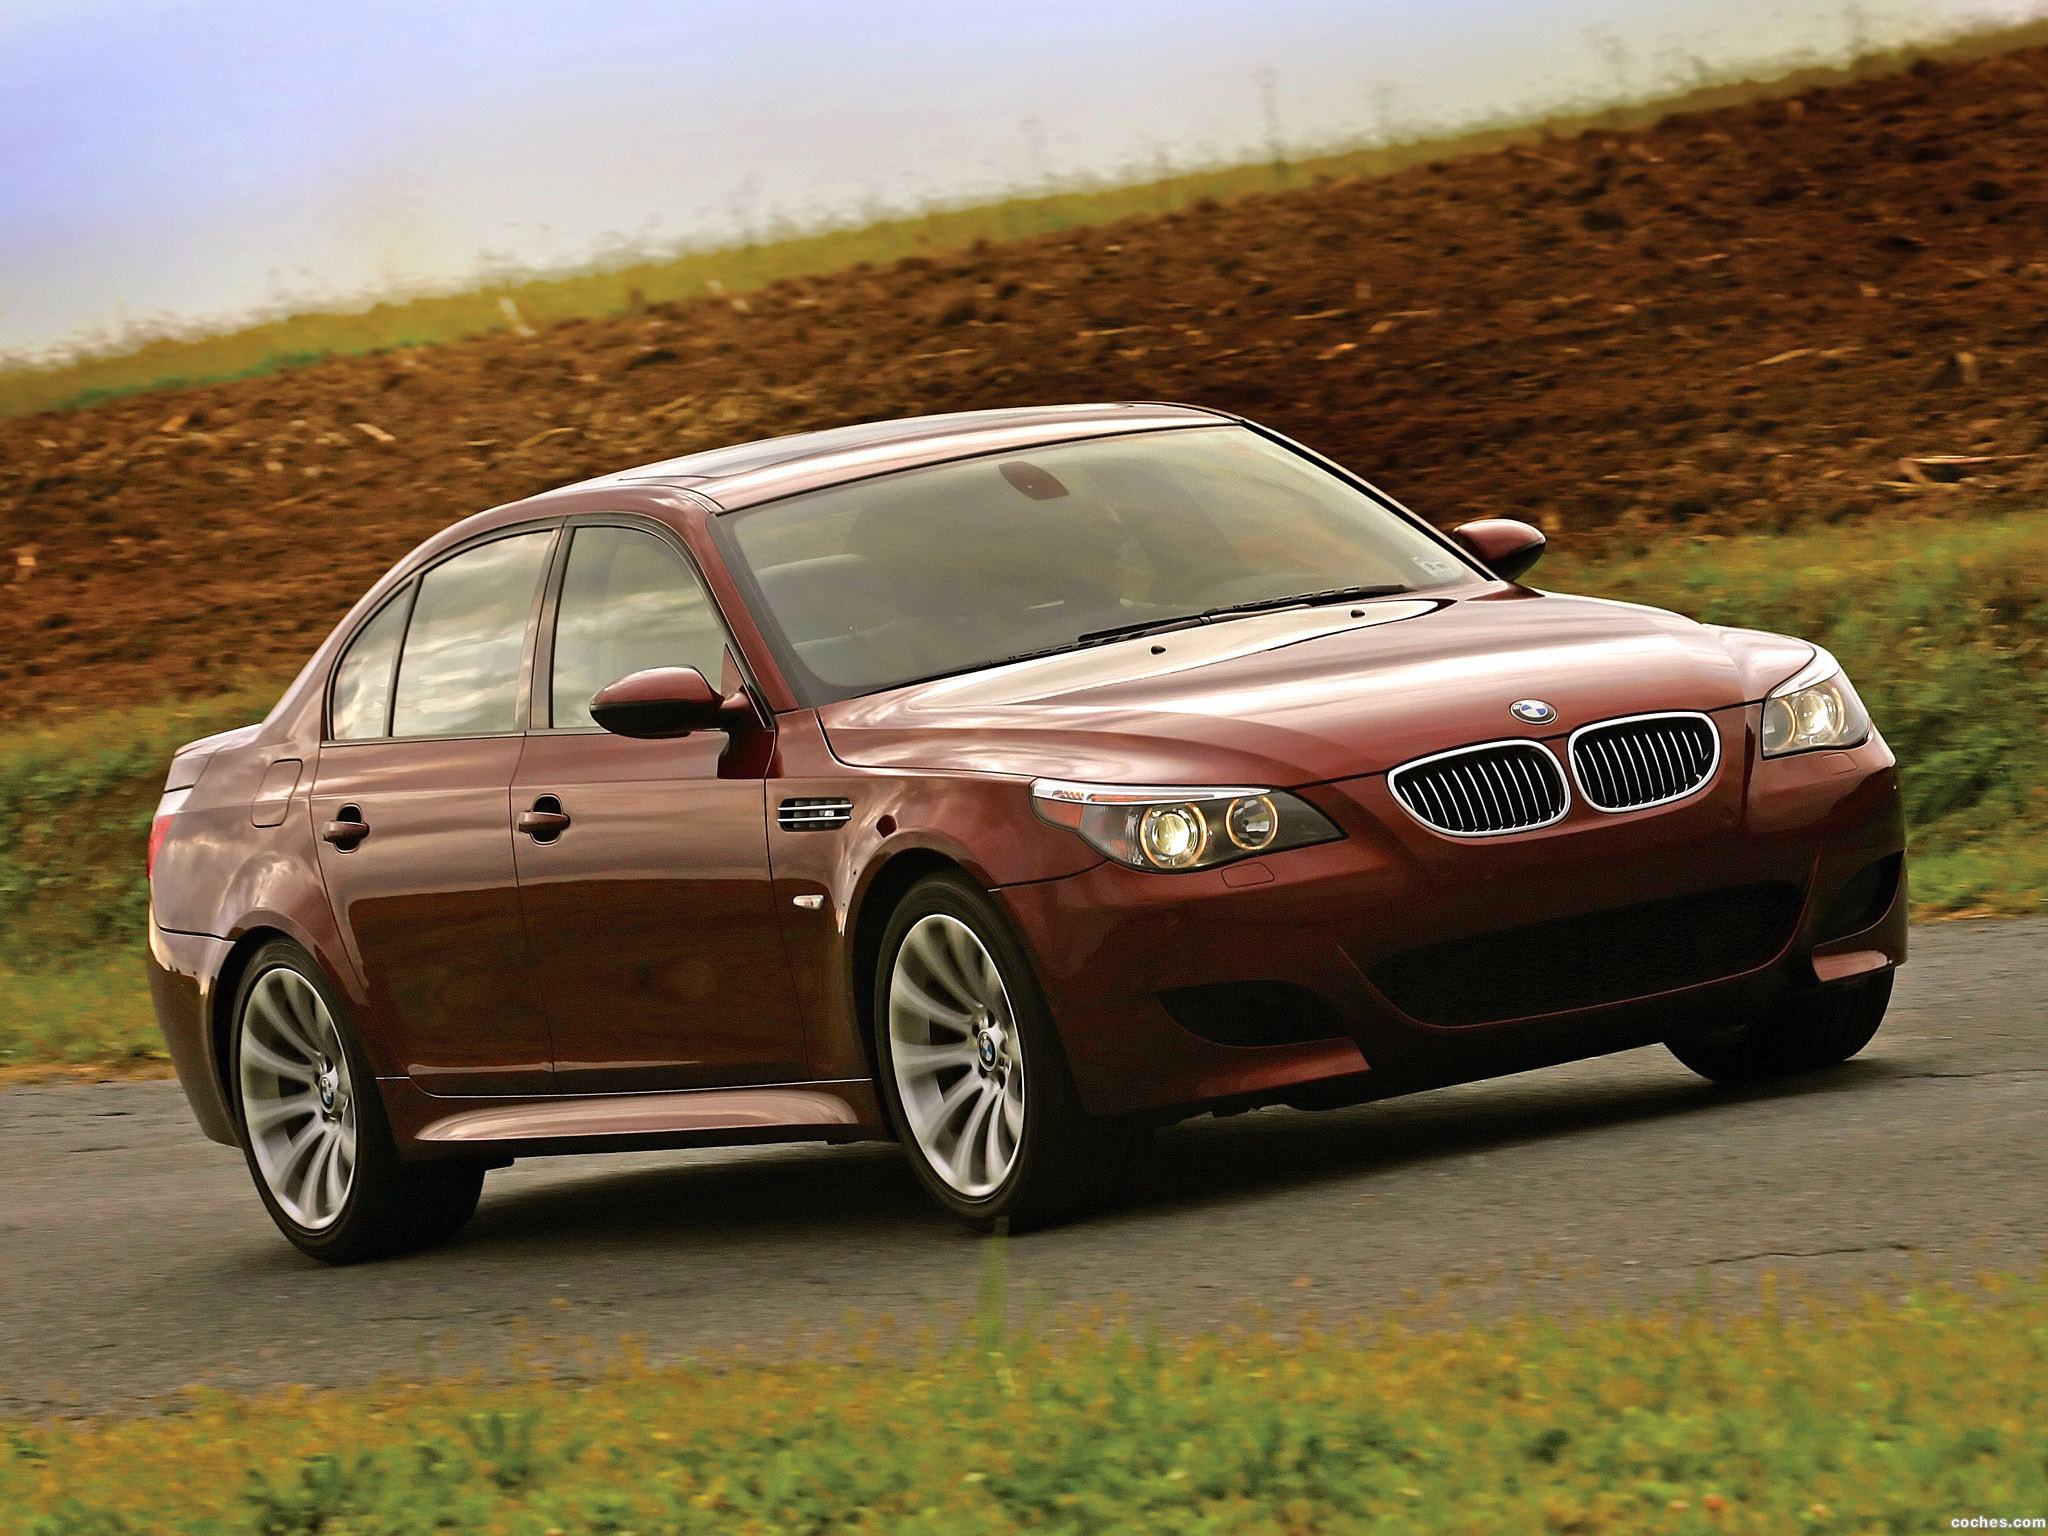 Е60 2007. BMW m5 2007. BMW m5 e60 2004. BMW 5 e60 2007. BMW m5 e60 2007.